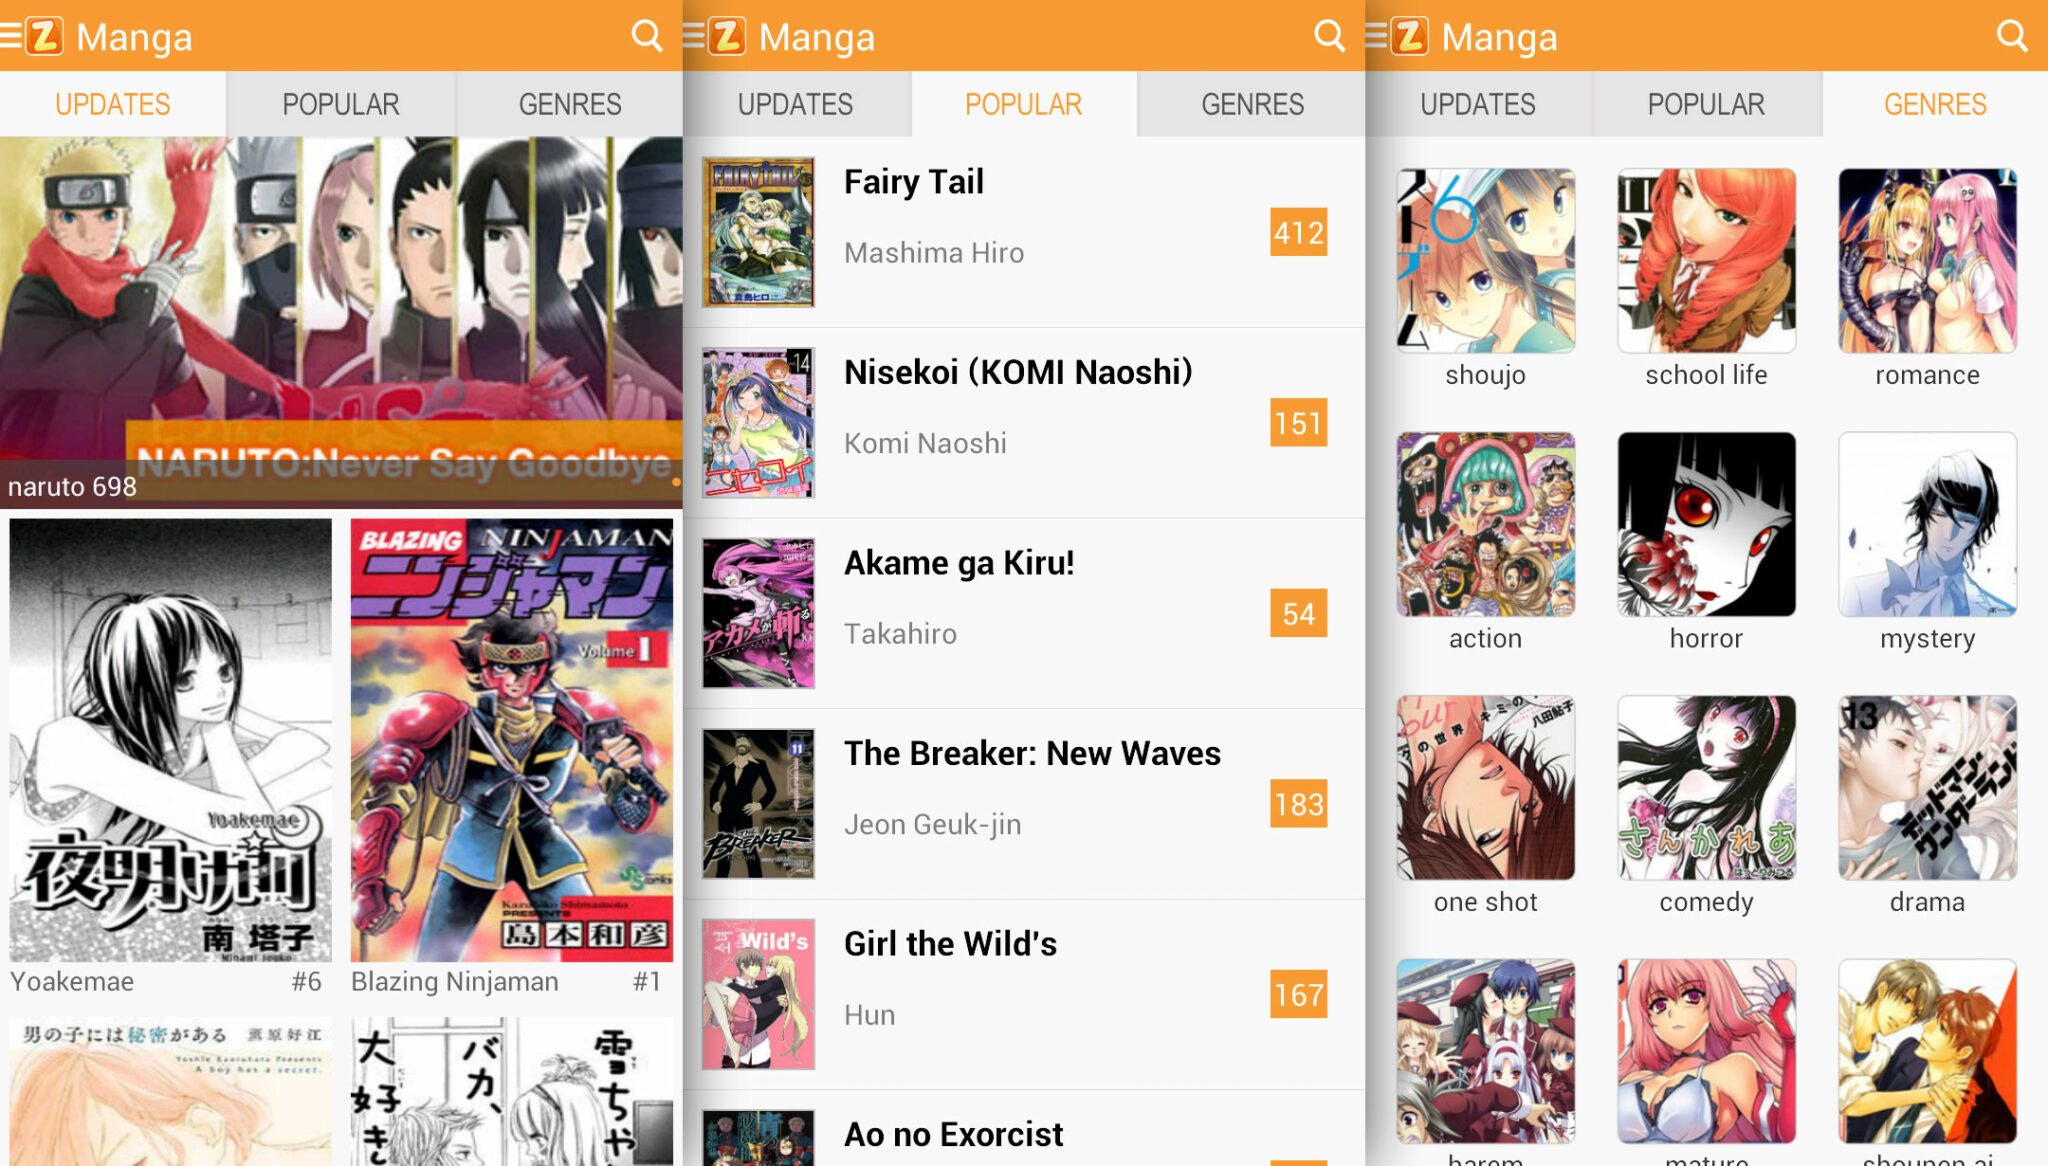 Music East Genre манги. ZINGBOX Manga описание. Манга как Жанр японской литературы итоги.